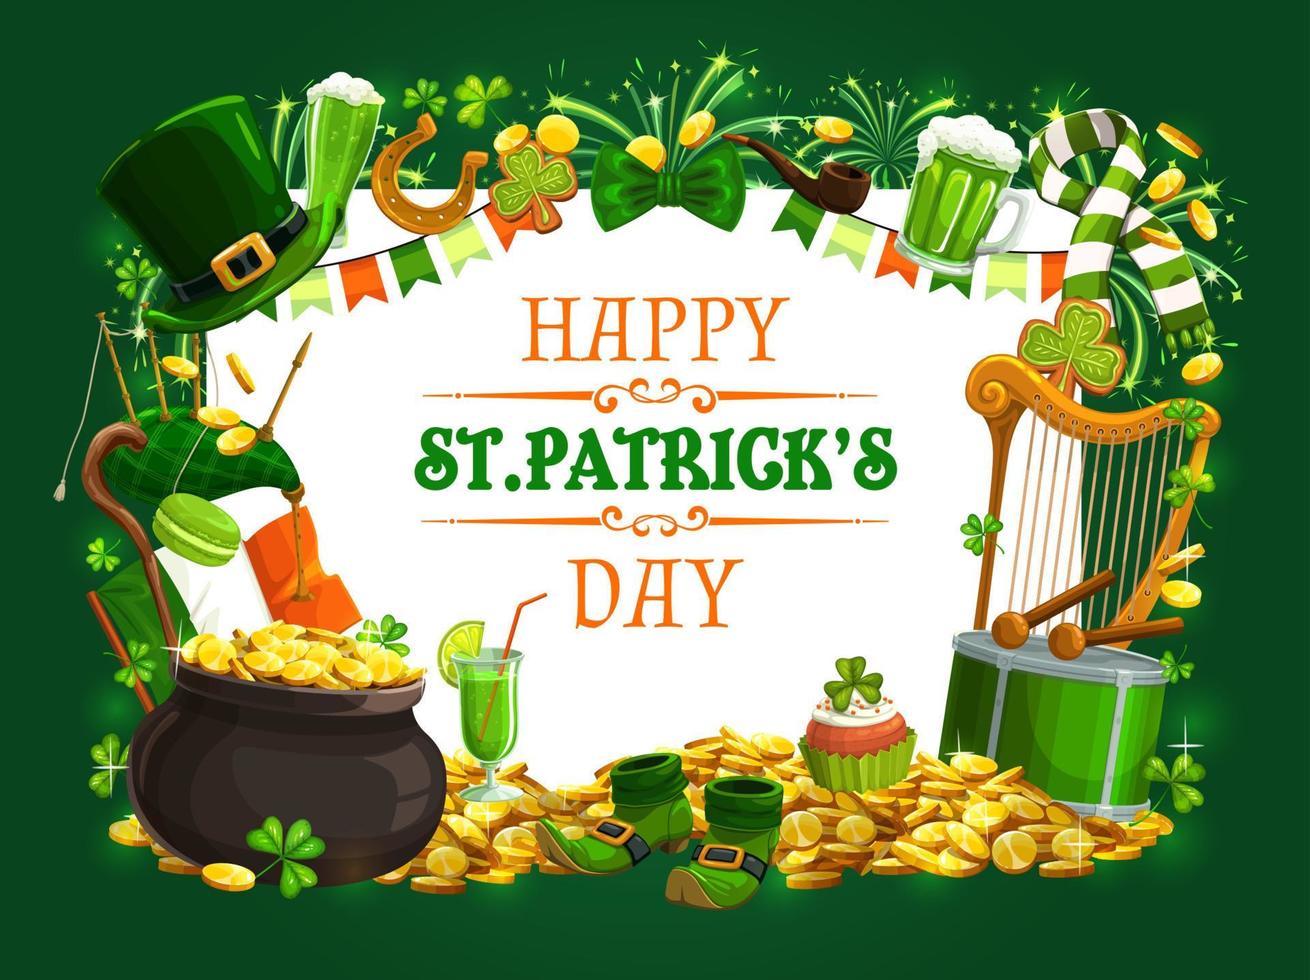 patricks dag groen klaver, bier, elf van Ierse folklore goud vector